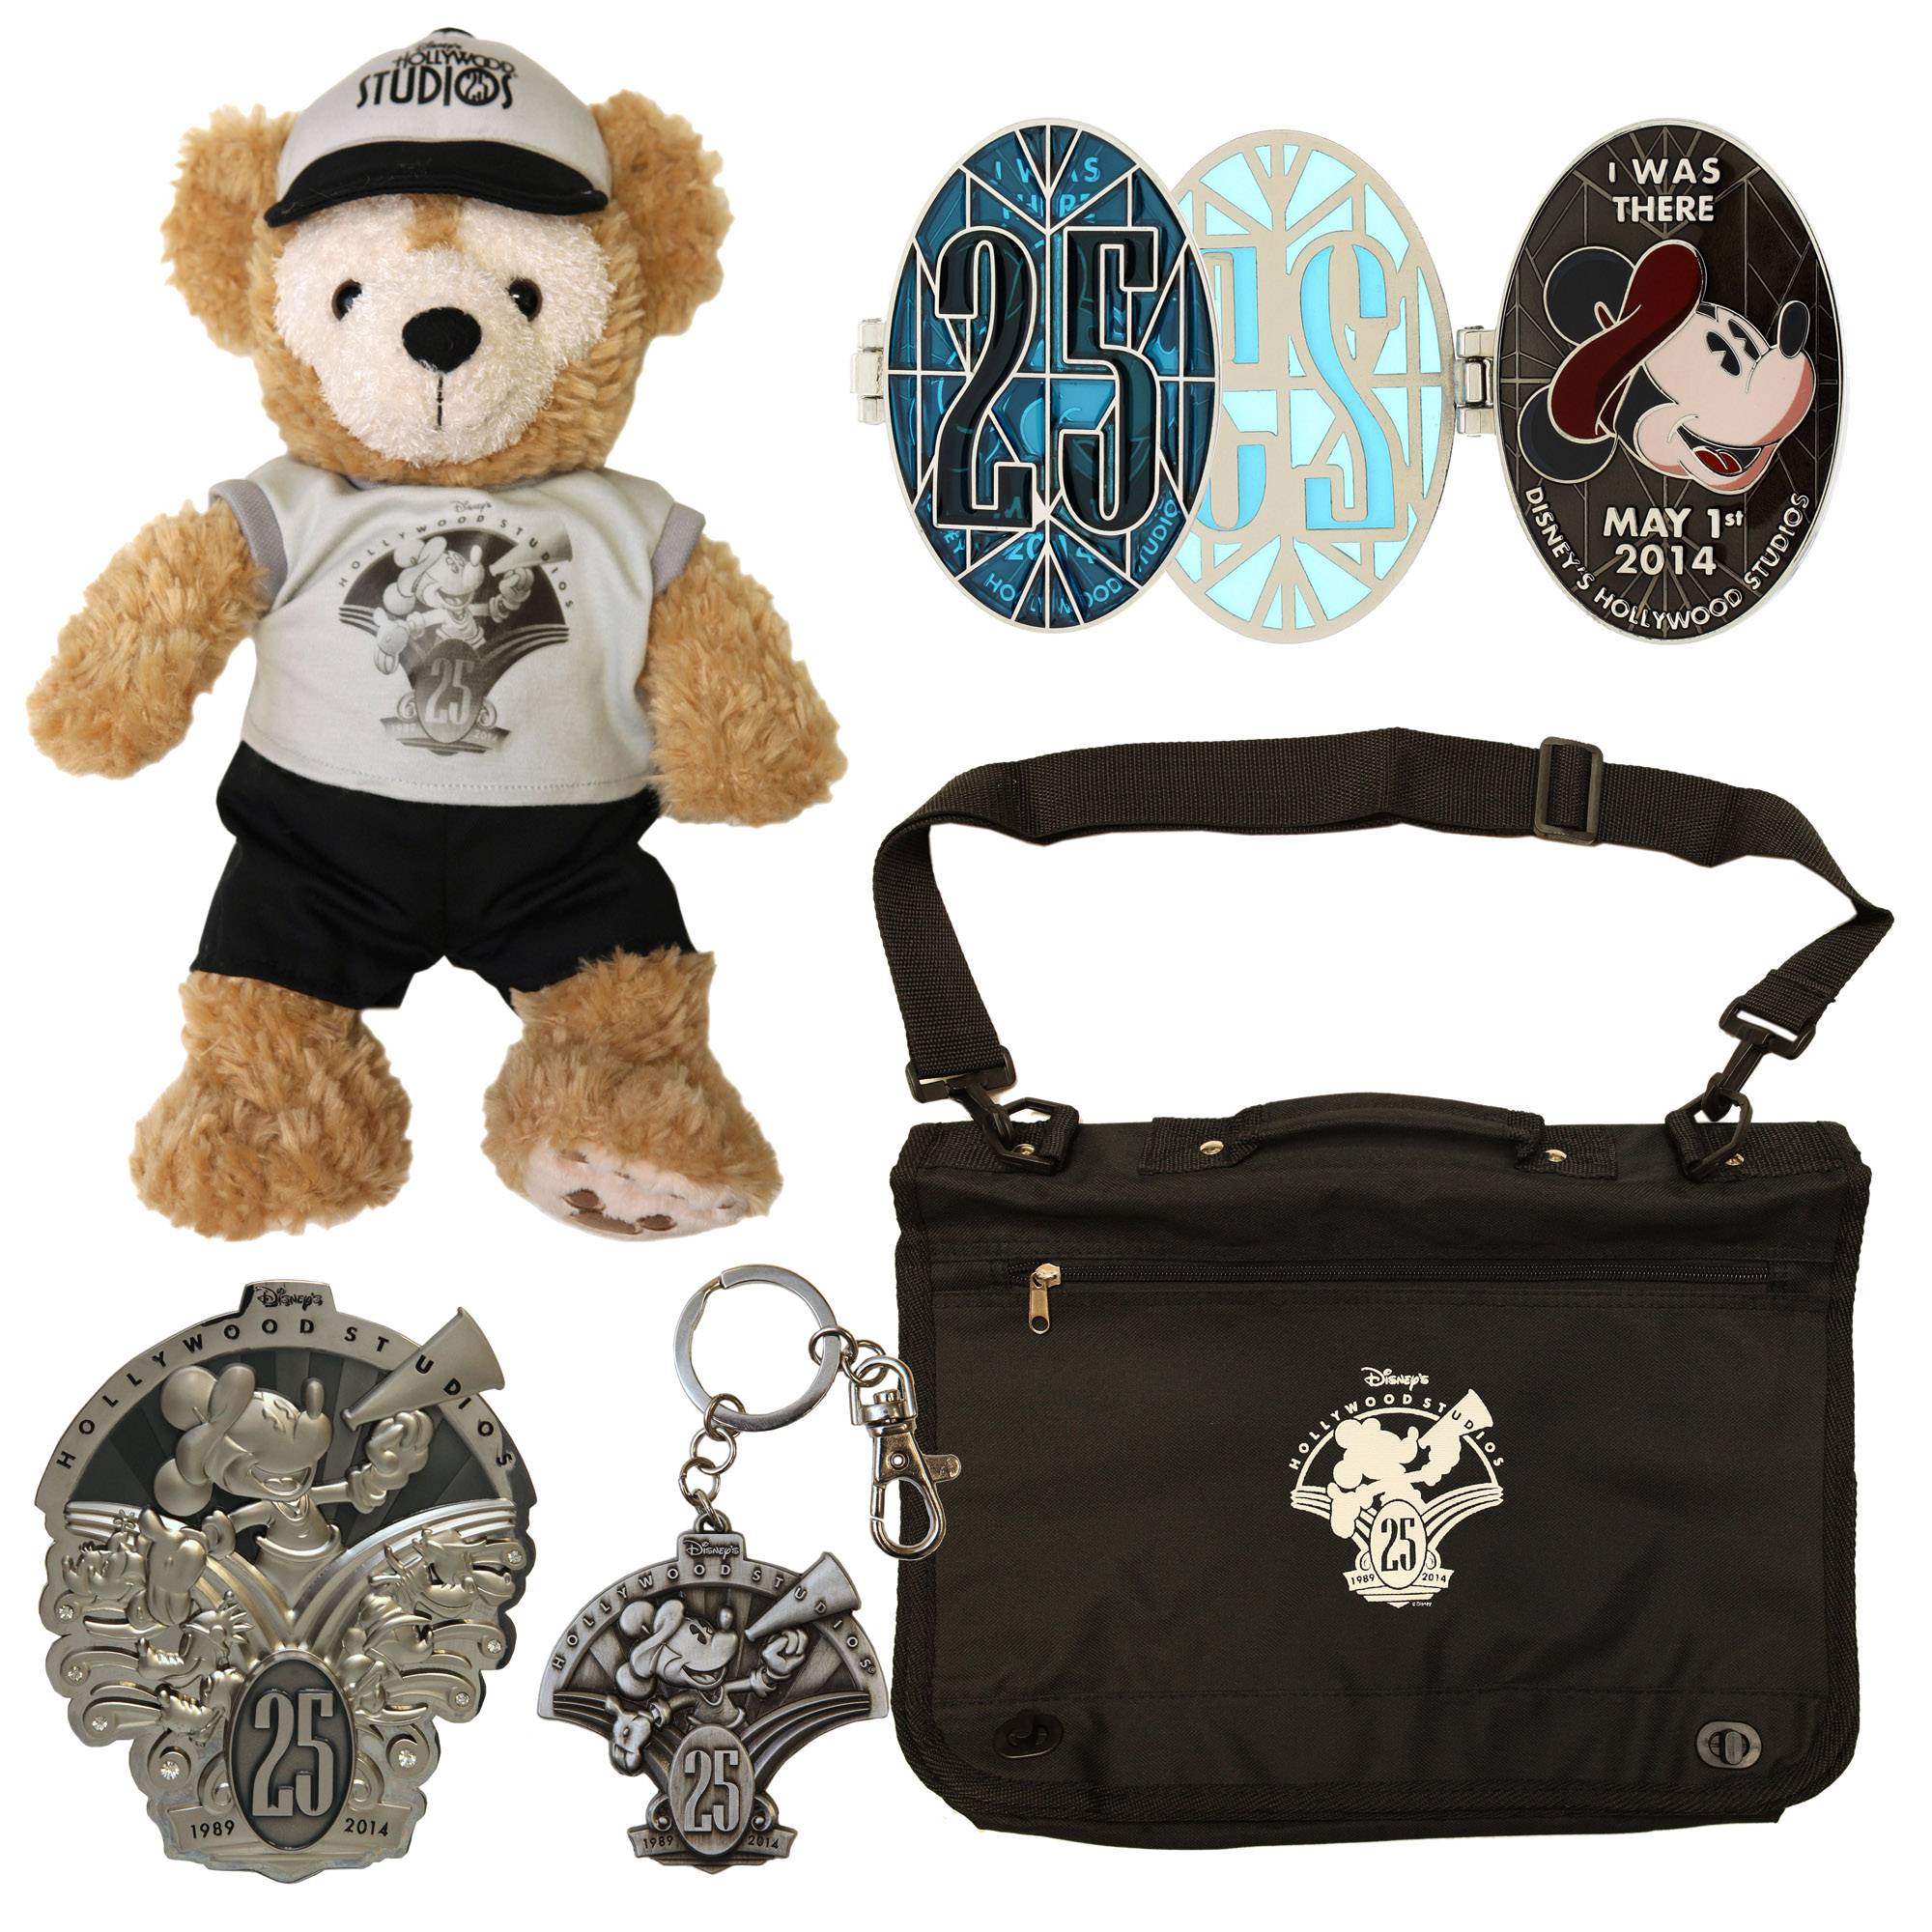 Disney's Hollywood Studios 25th anniversary merchandise - Duffy, Bags